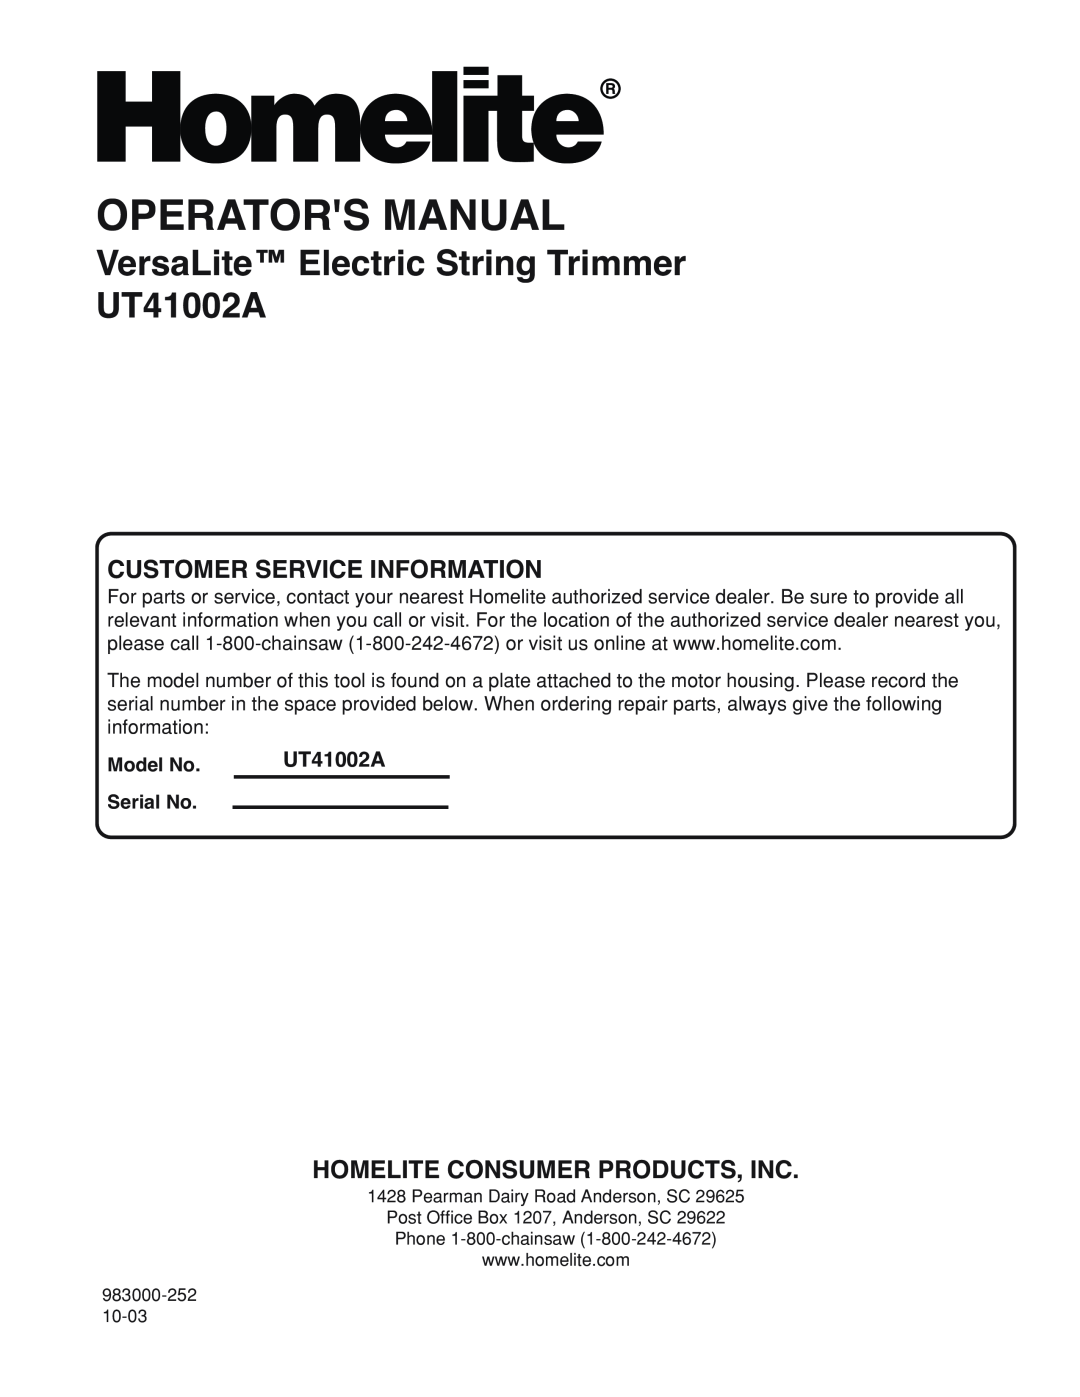 Homelite UT41002A Customer Service Information, Homelite Consumer Products, Inc, Model No, Serial No, Operators Manual 